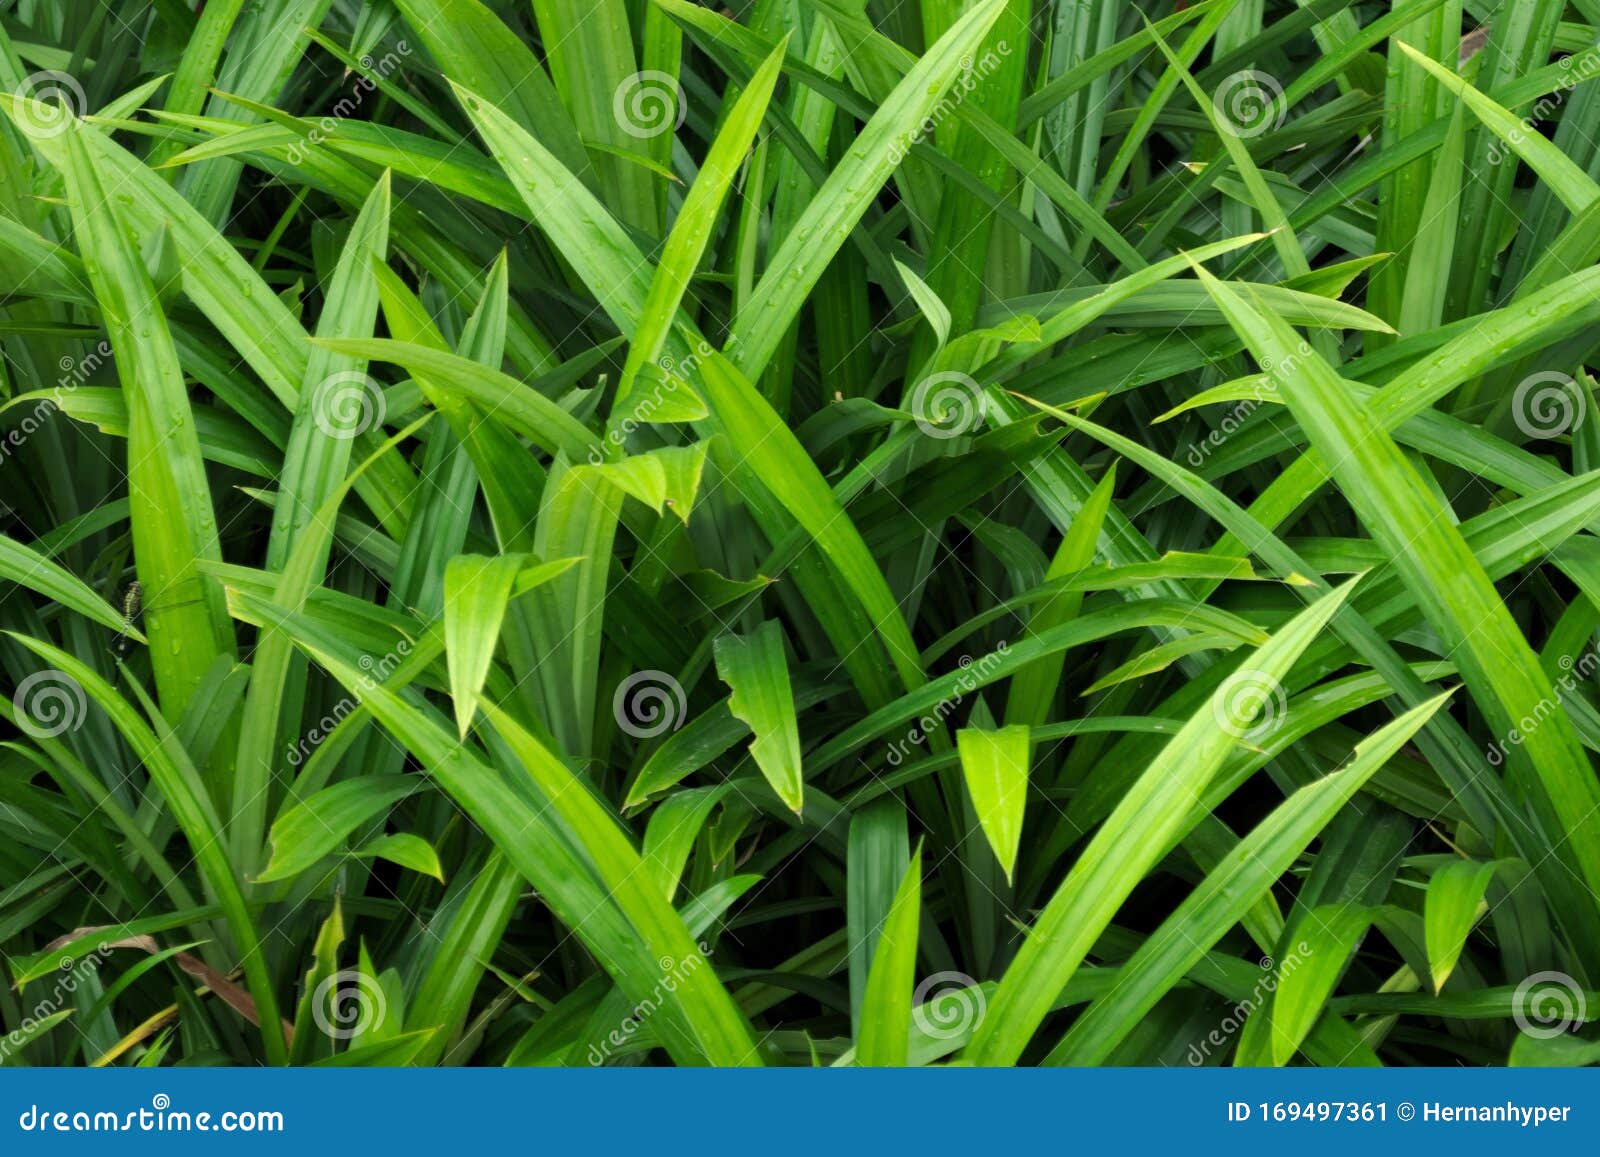 Vivid Lush Grass Wallpaper